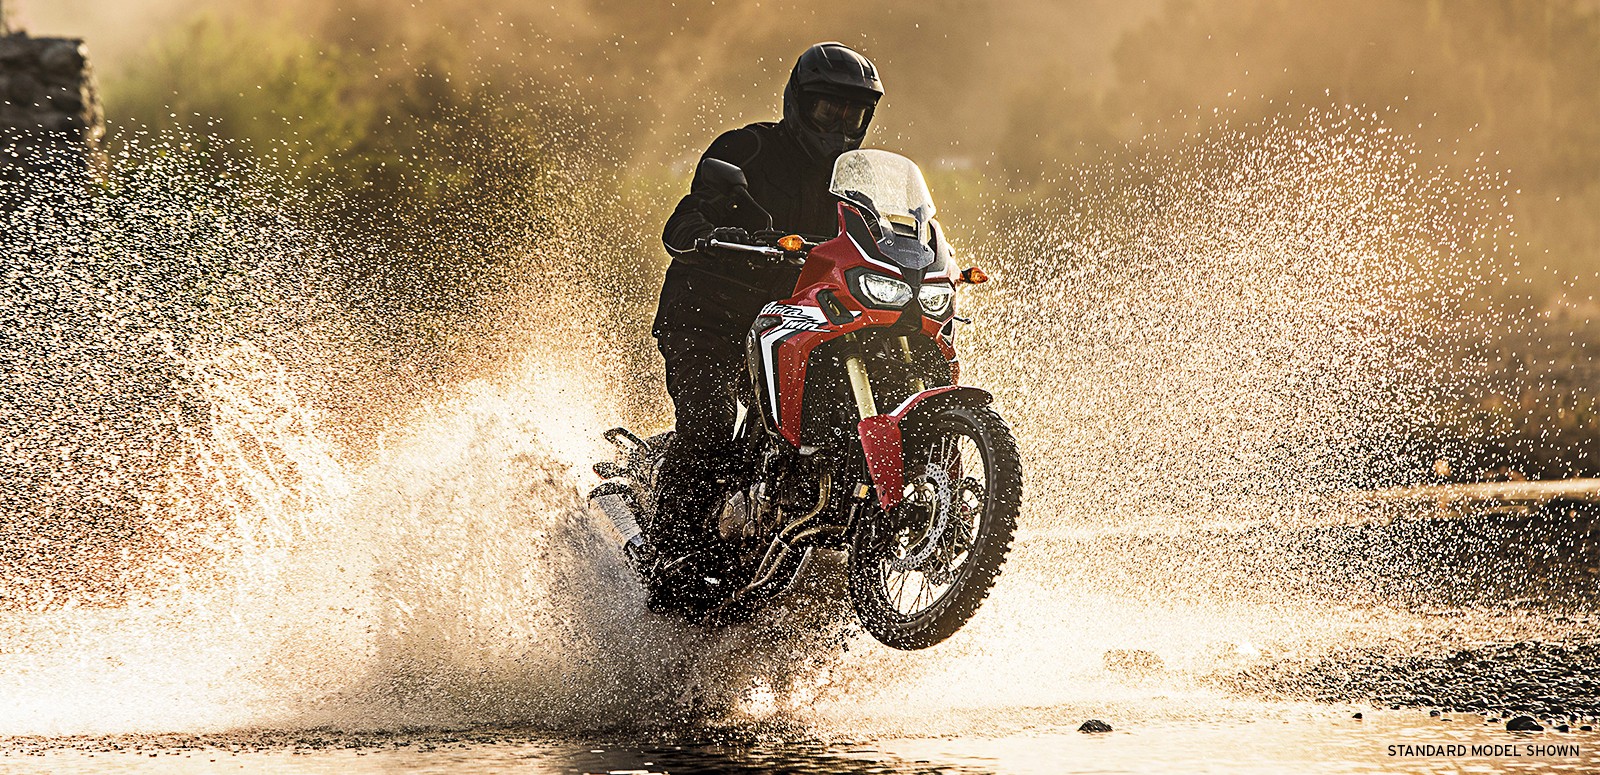 People 1600x775 Honda Africa Twin motorcycle water splashes